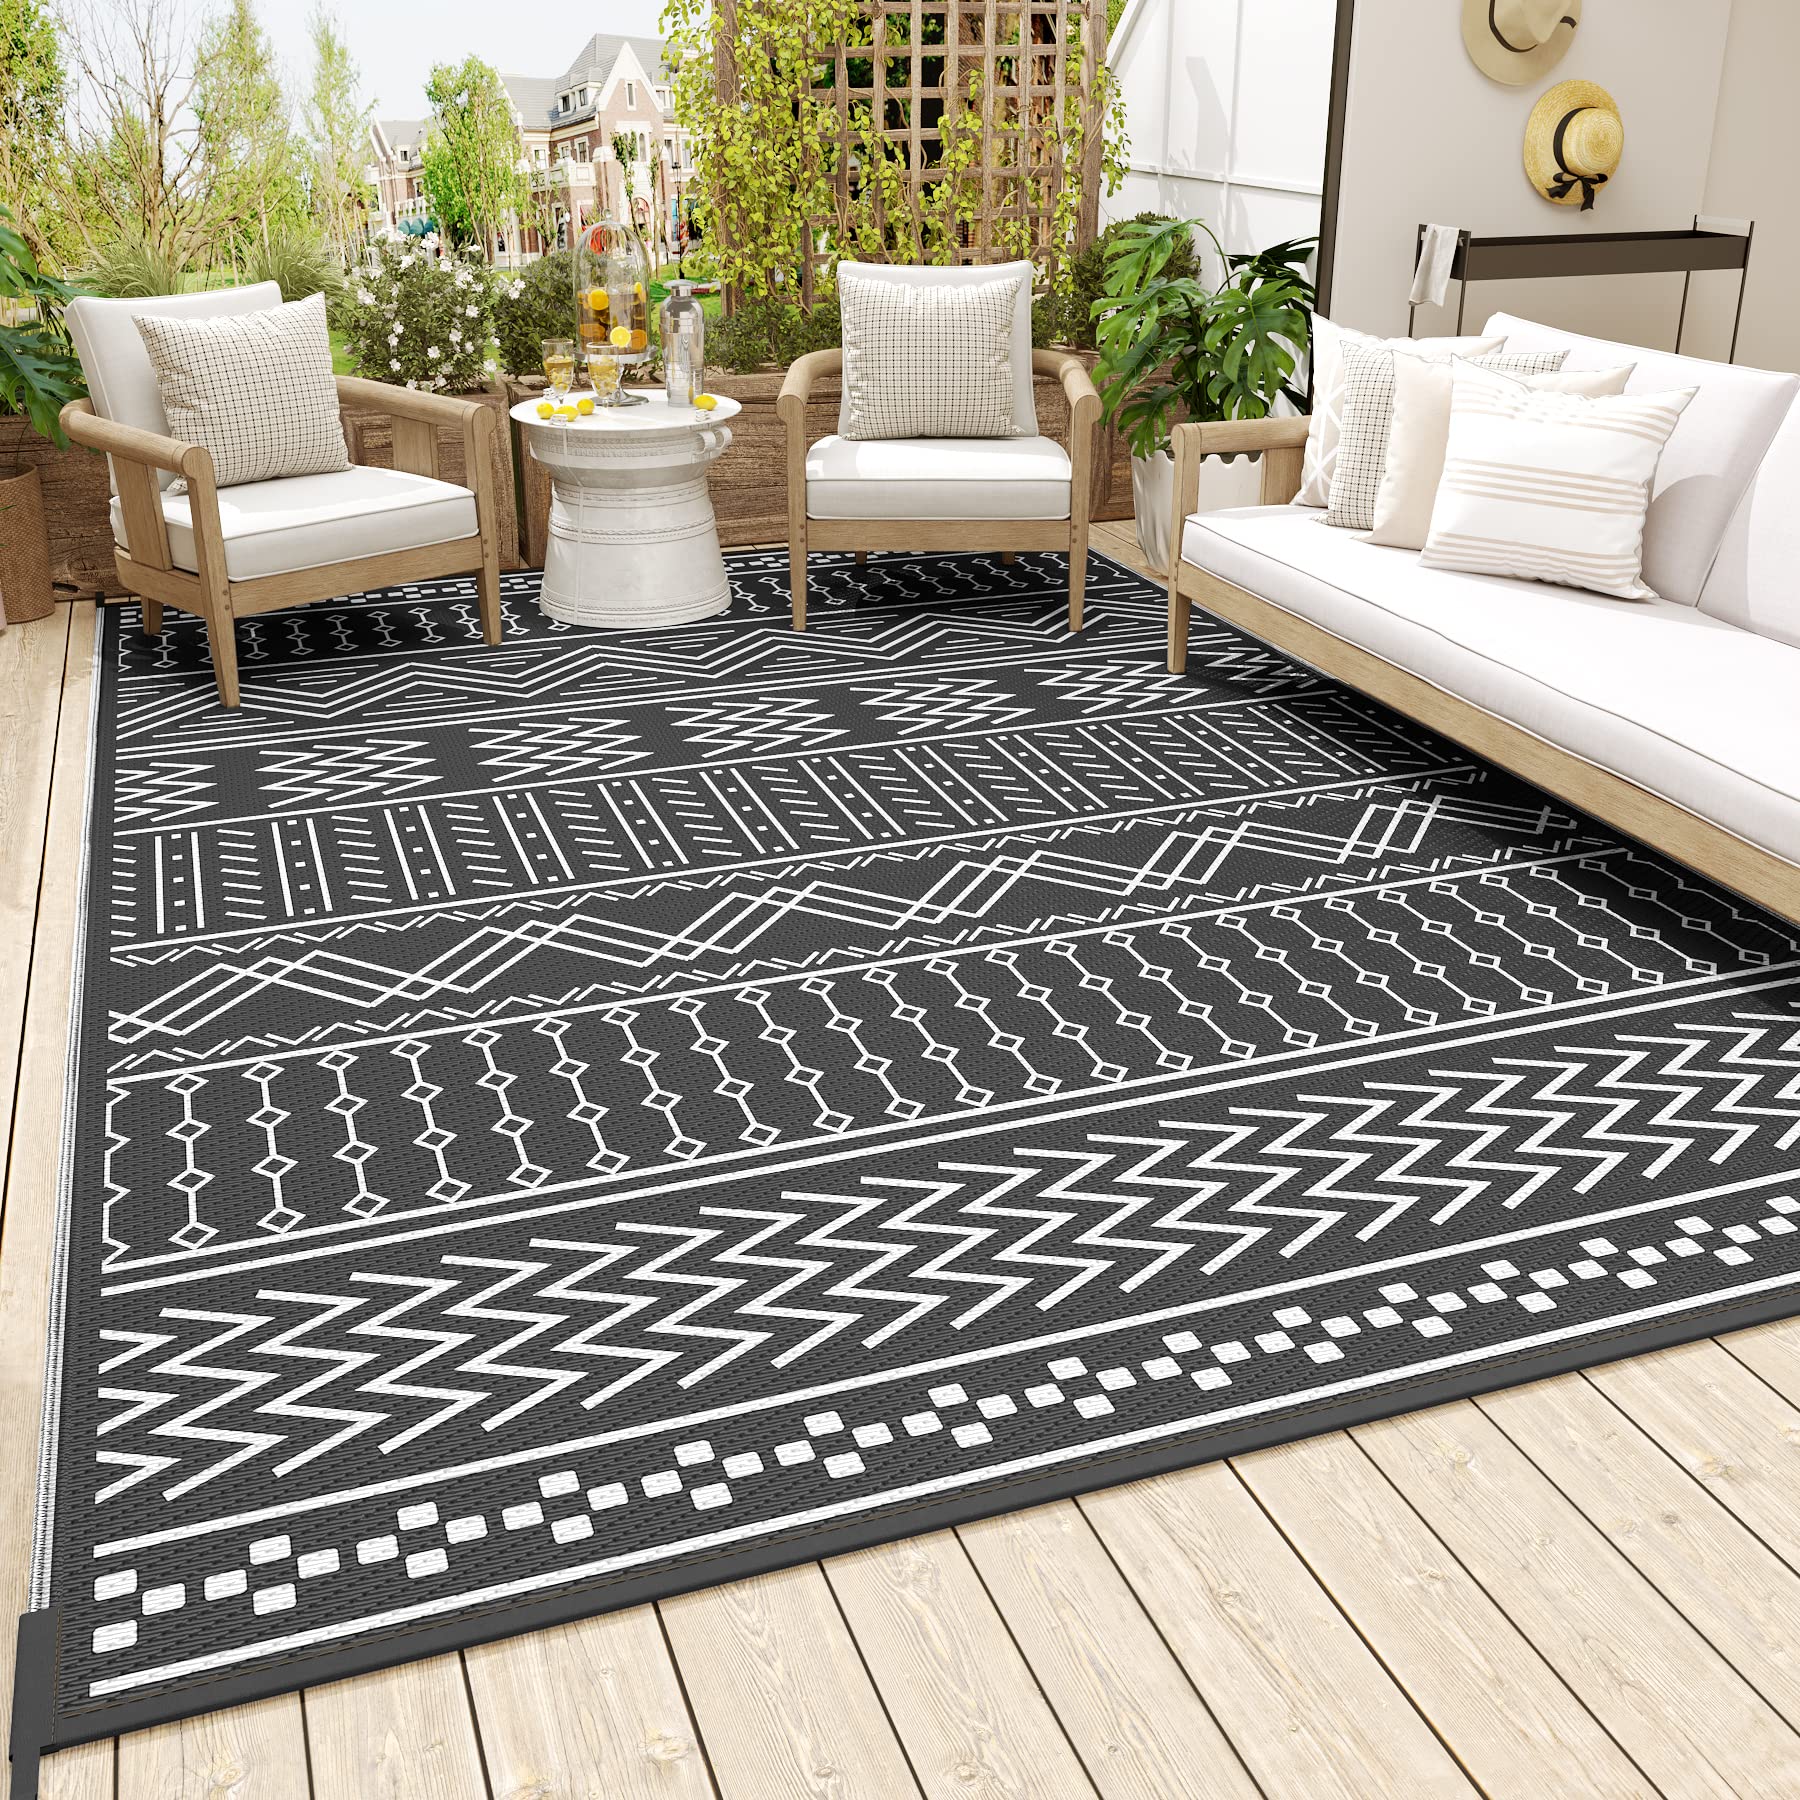 Place an Outdoor Carpet